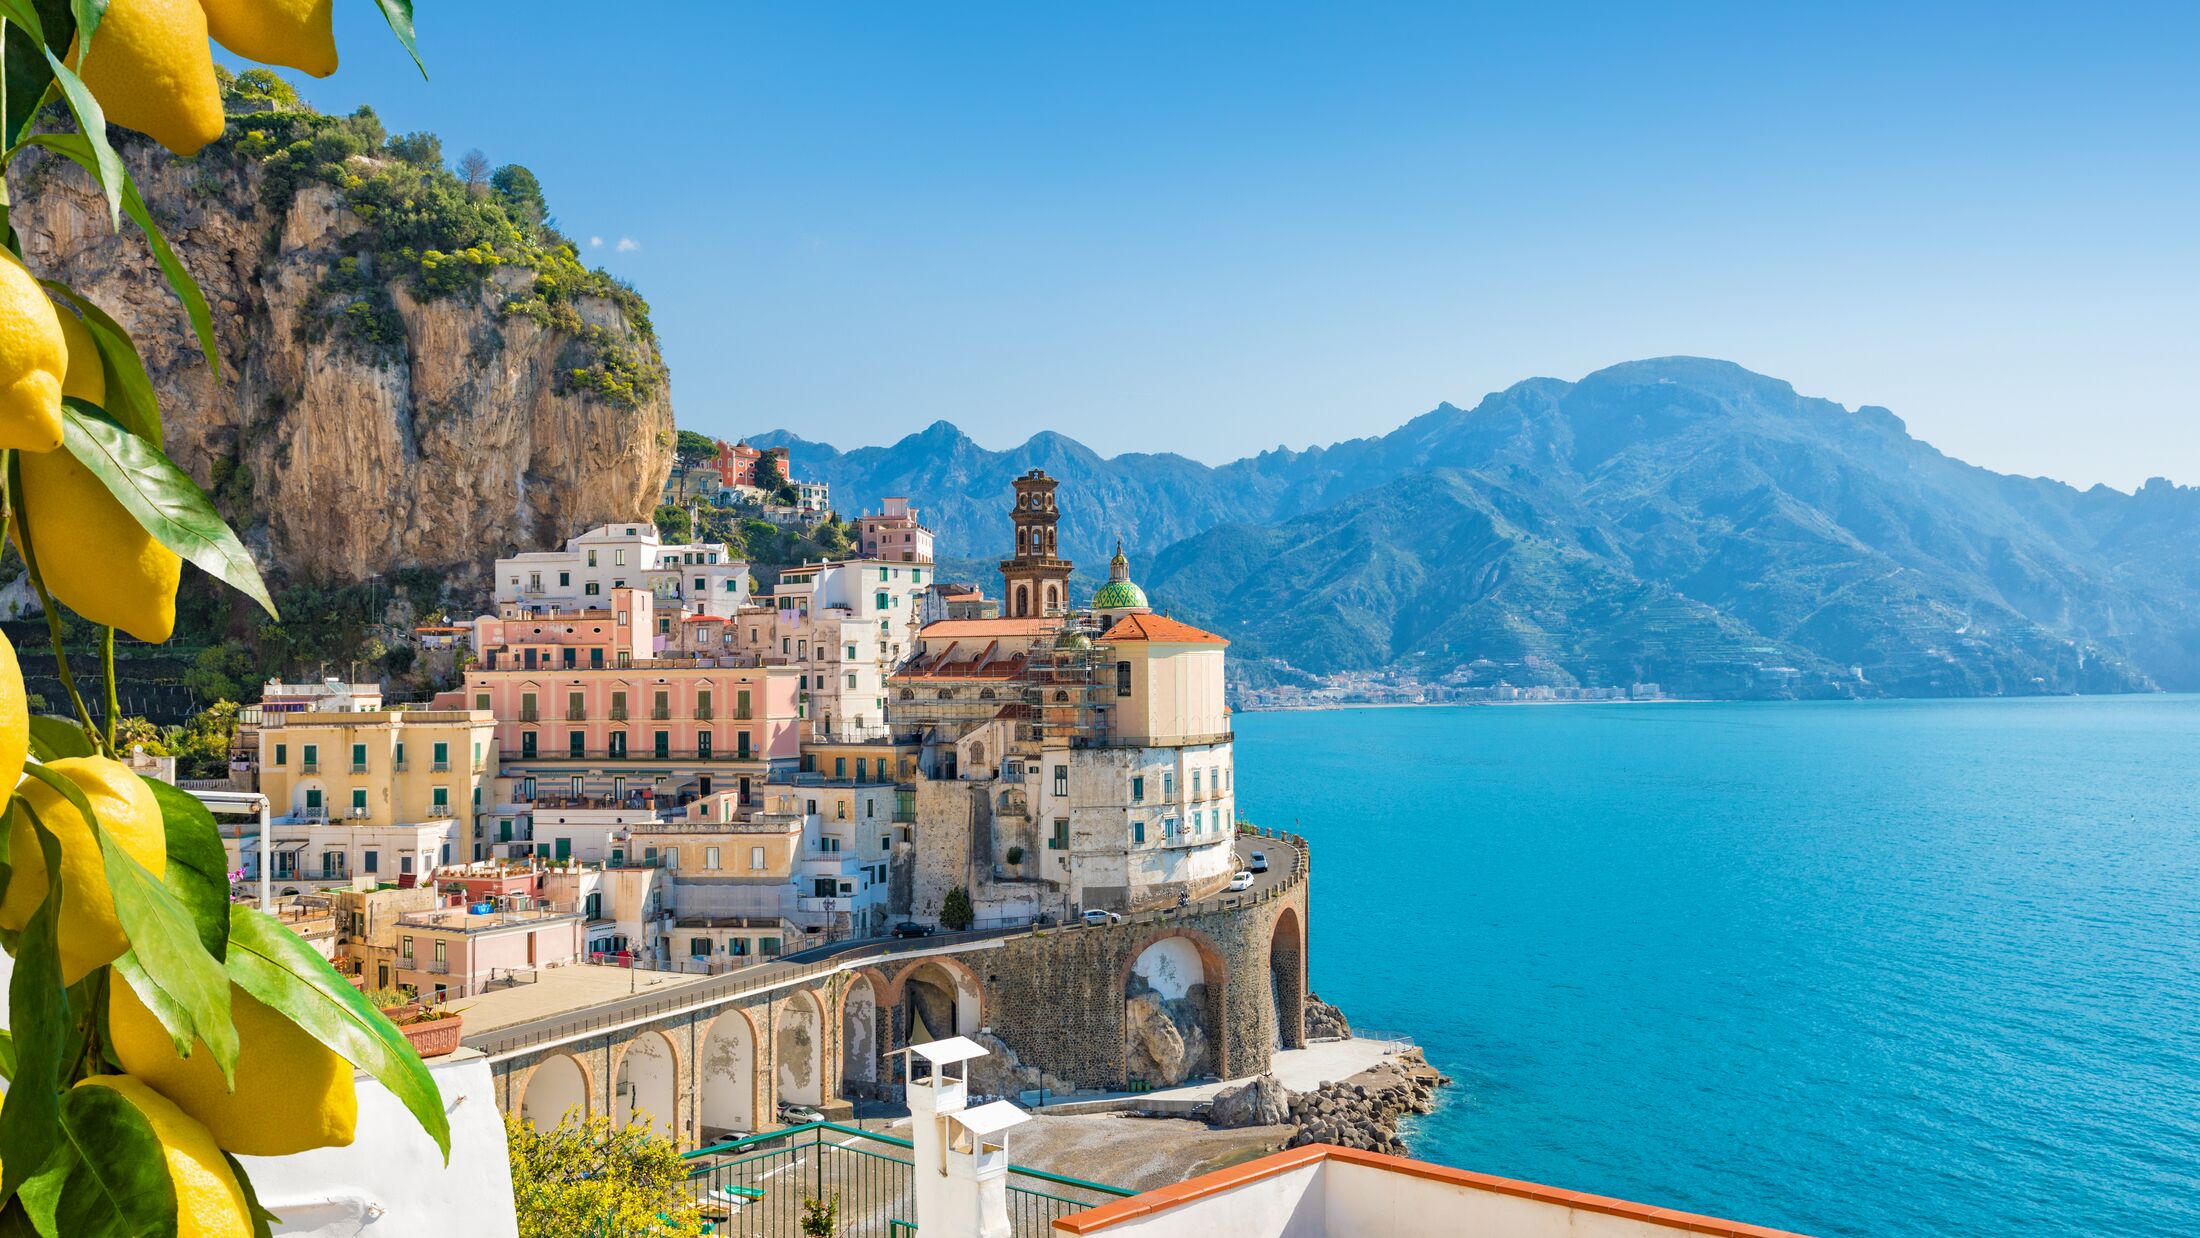 Small city Atrani on Amalfi Coast in province of Salerno, Campania region, Italy. Amalfi coast on Gulf of Salerno is popular travel and holyday destination in Italy. Ripe yellow lemons in foreground.